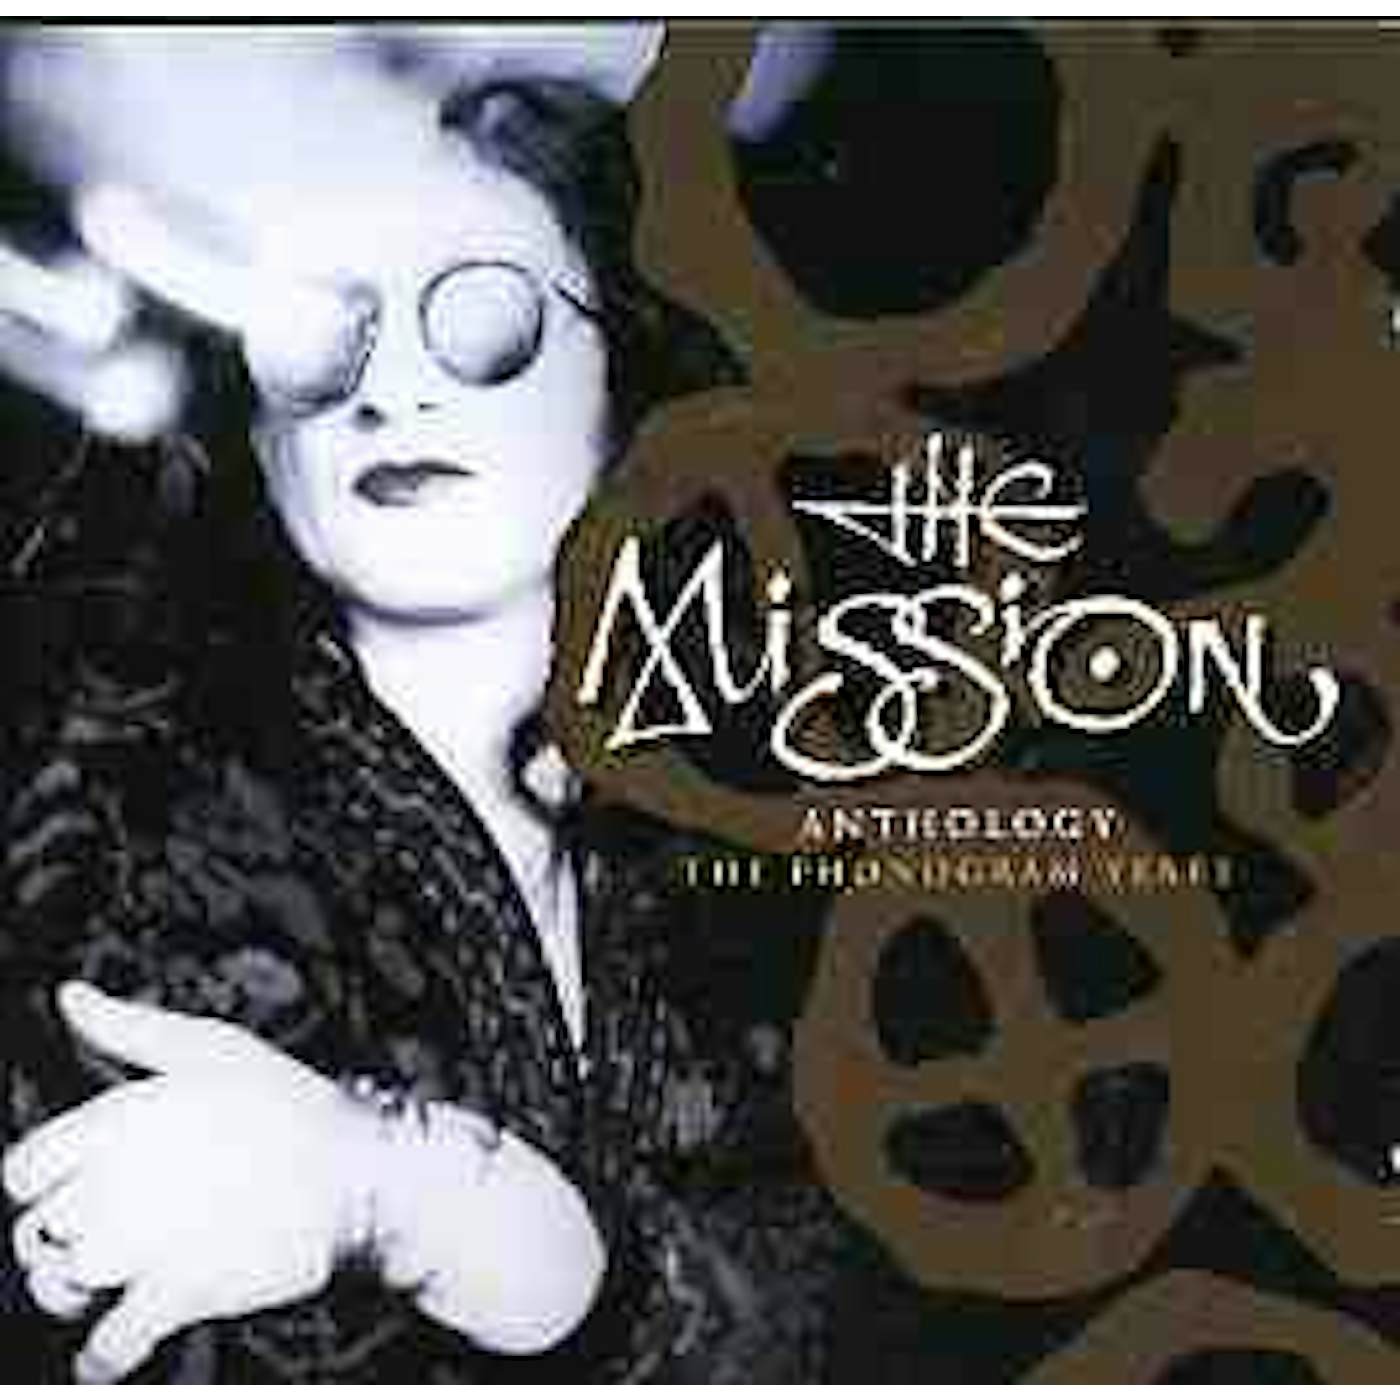 The Mission ANTHOLOGY-PHONOGRAM YEARS CD